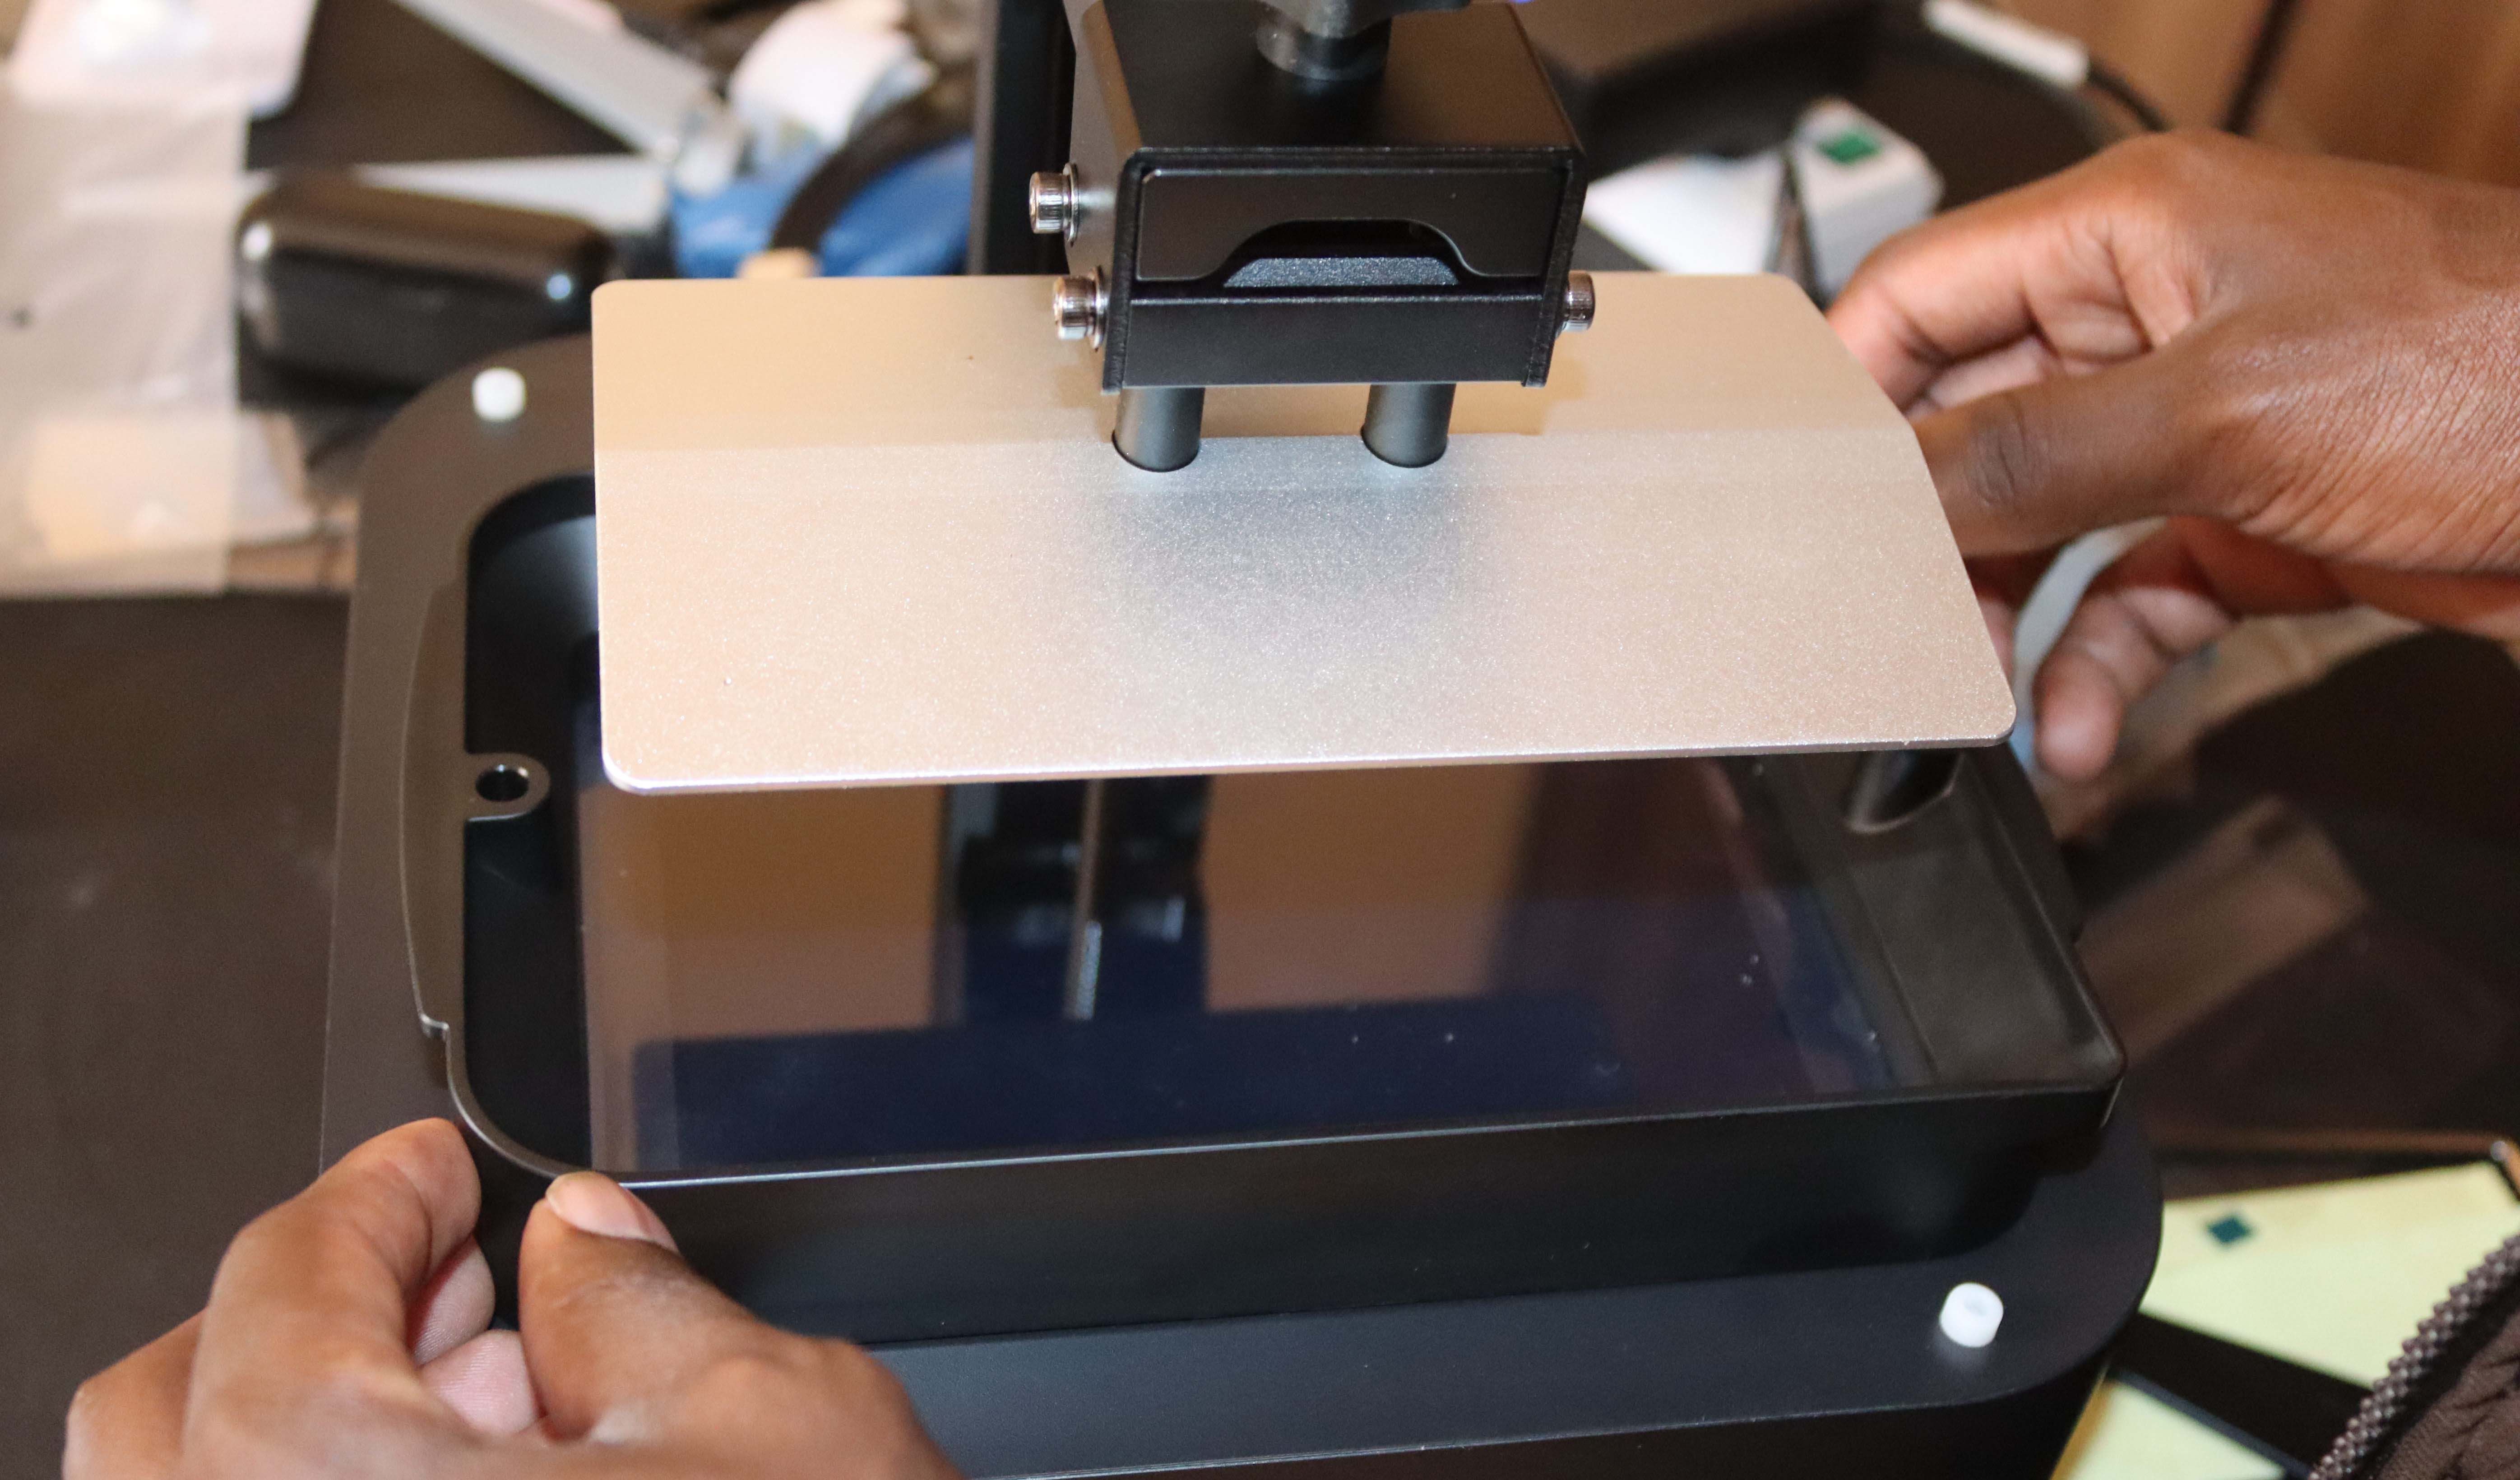 Preparing the resin machine for 3D printing